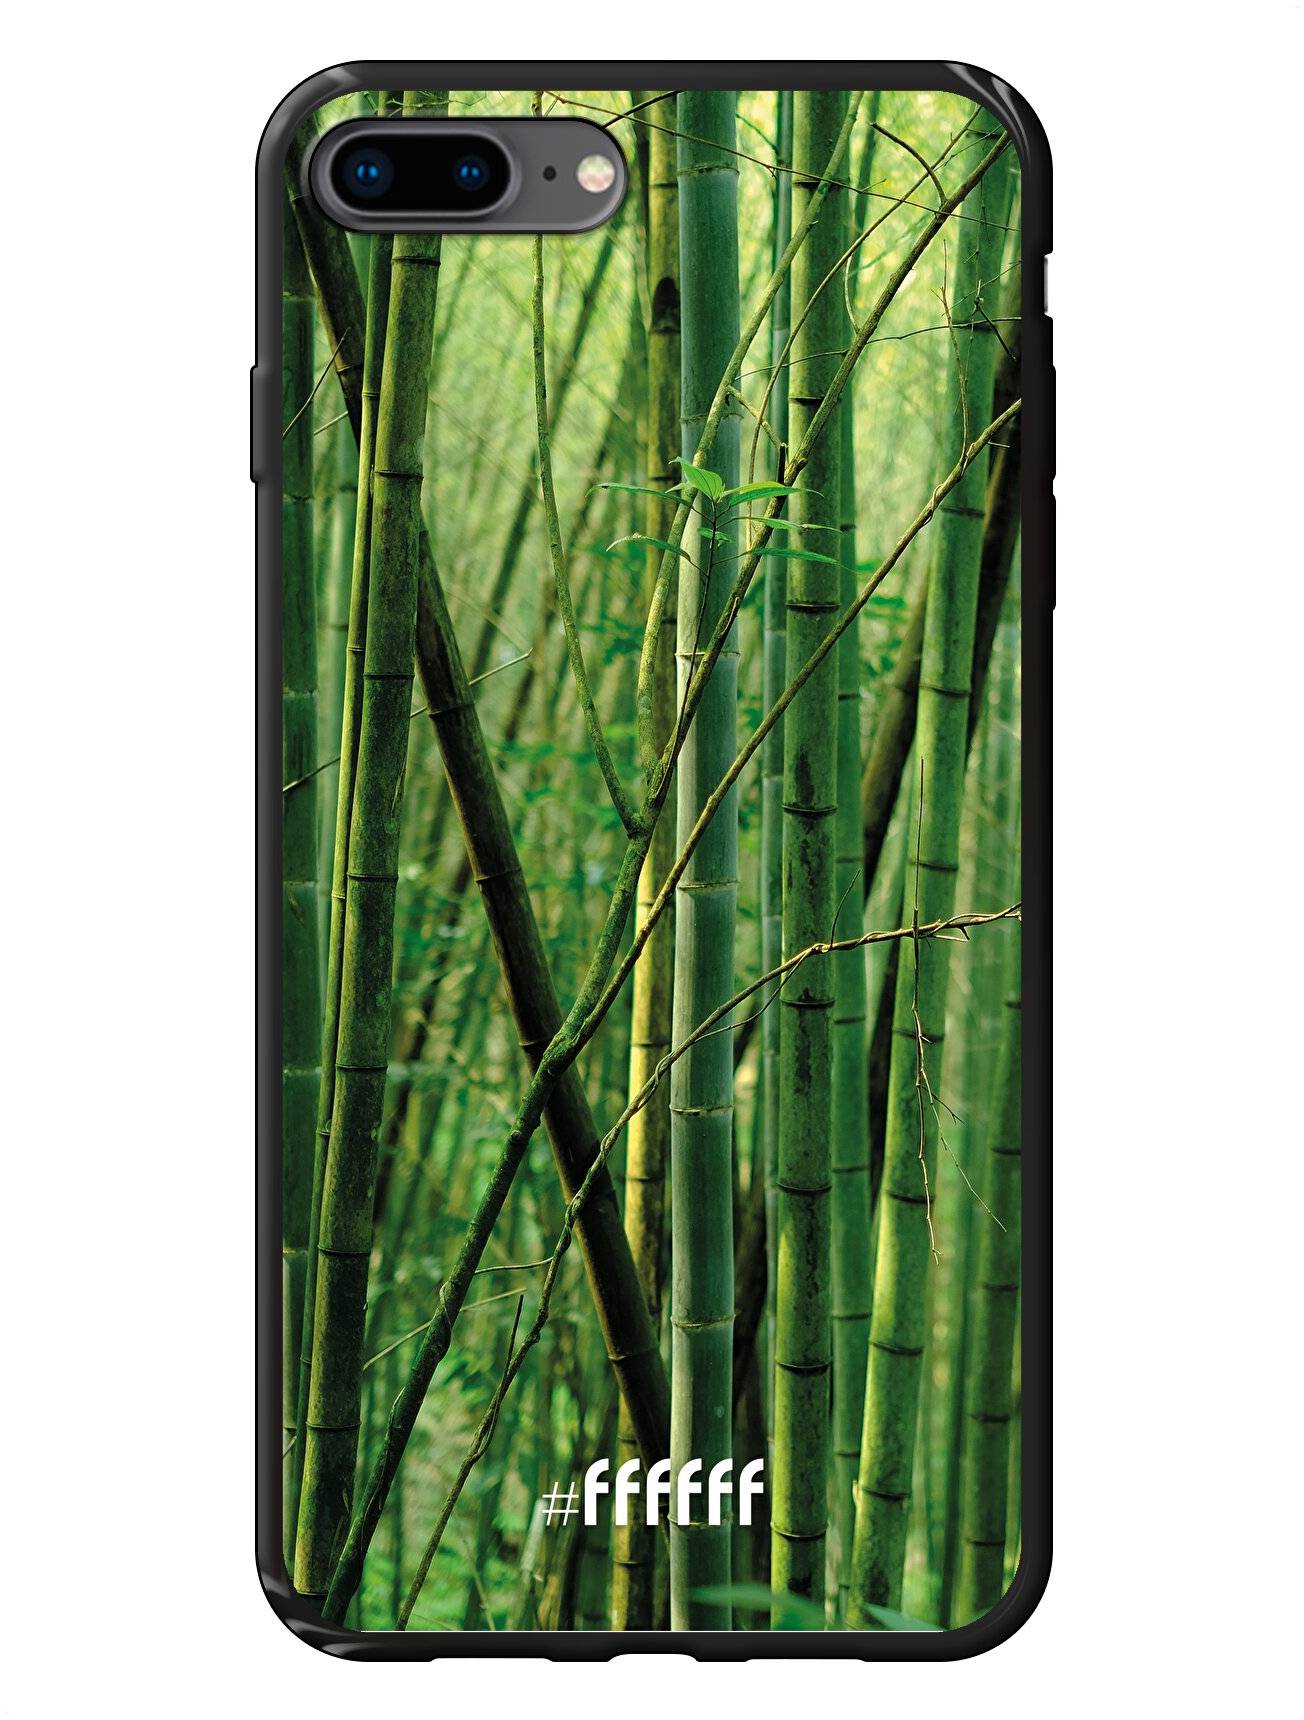 Bamboo iPhone 8 Plus